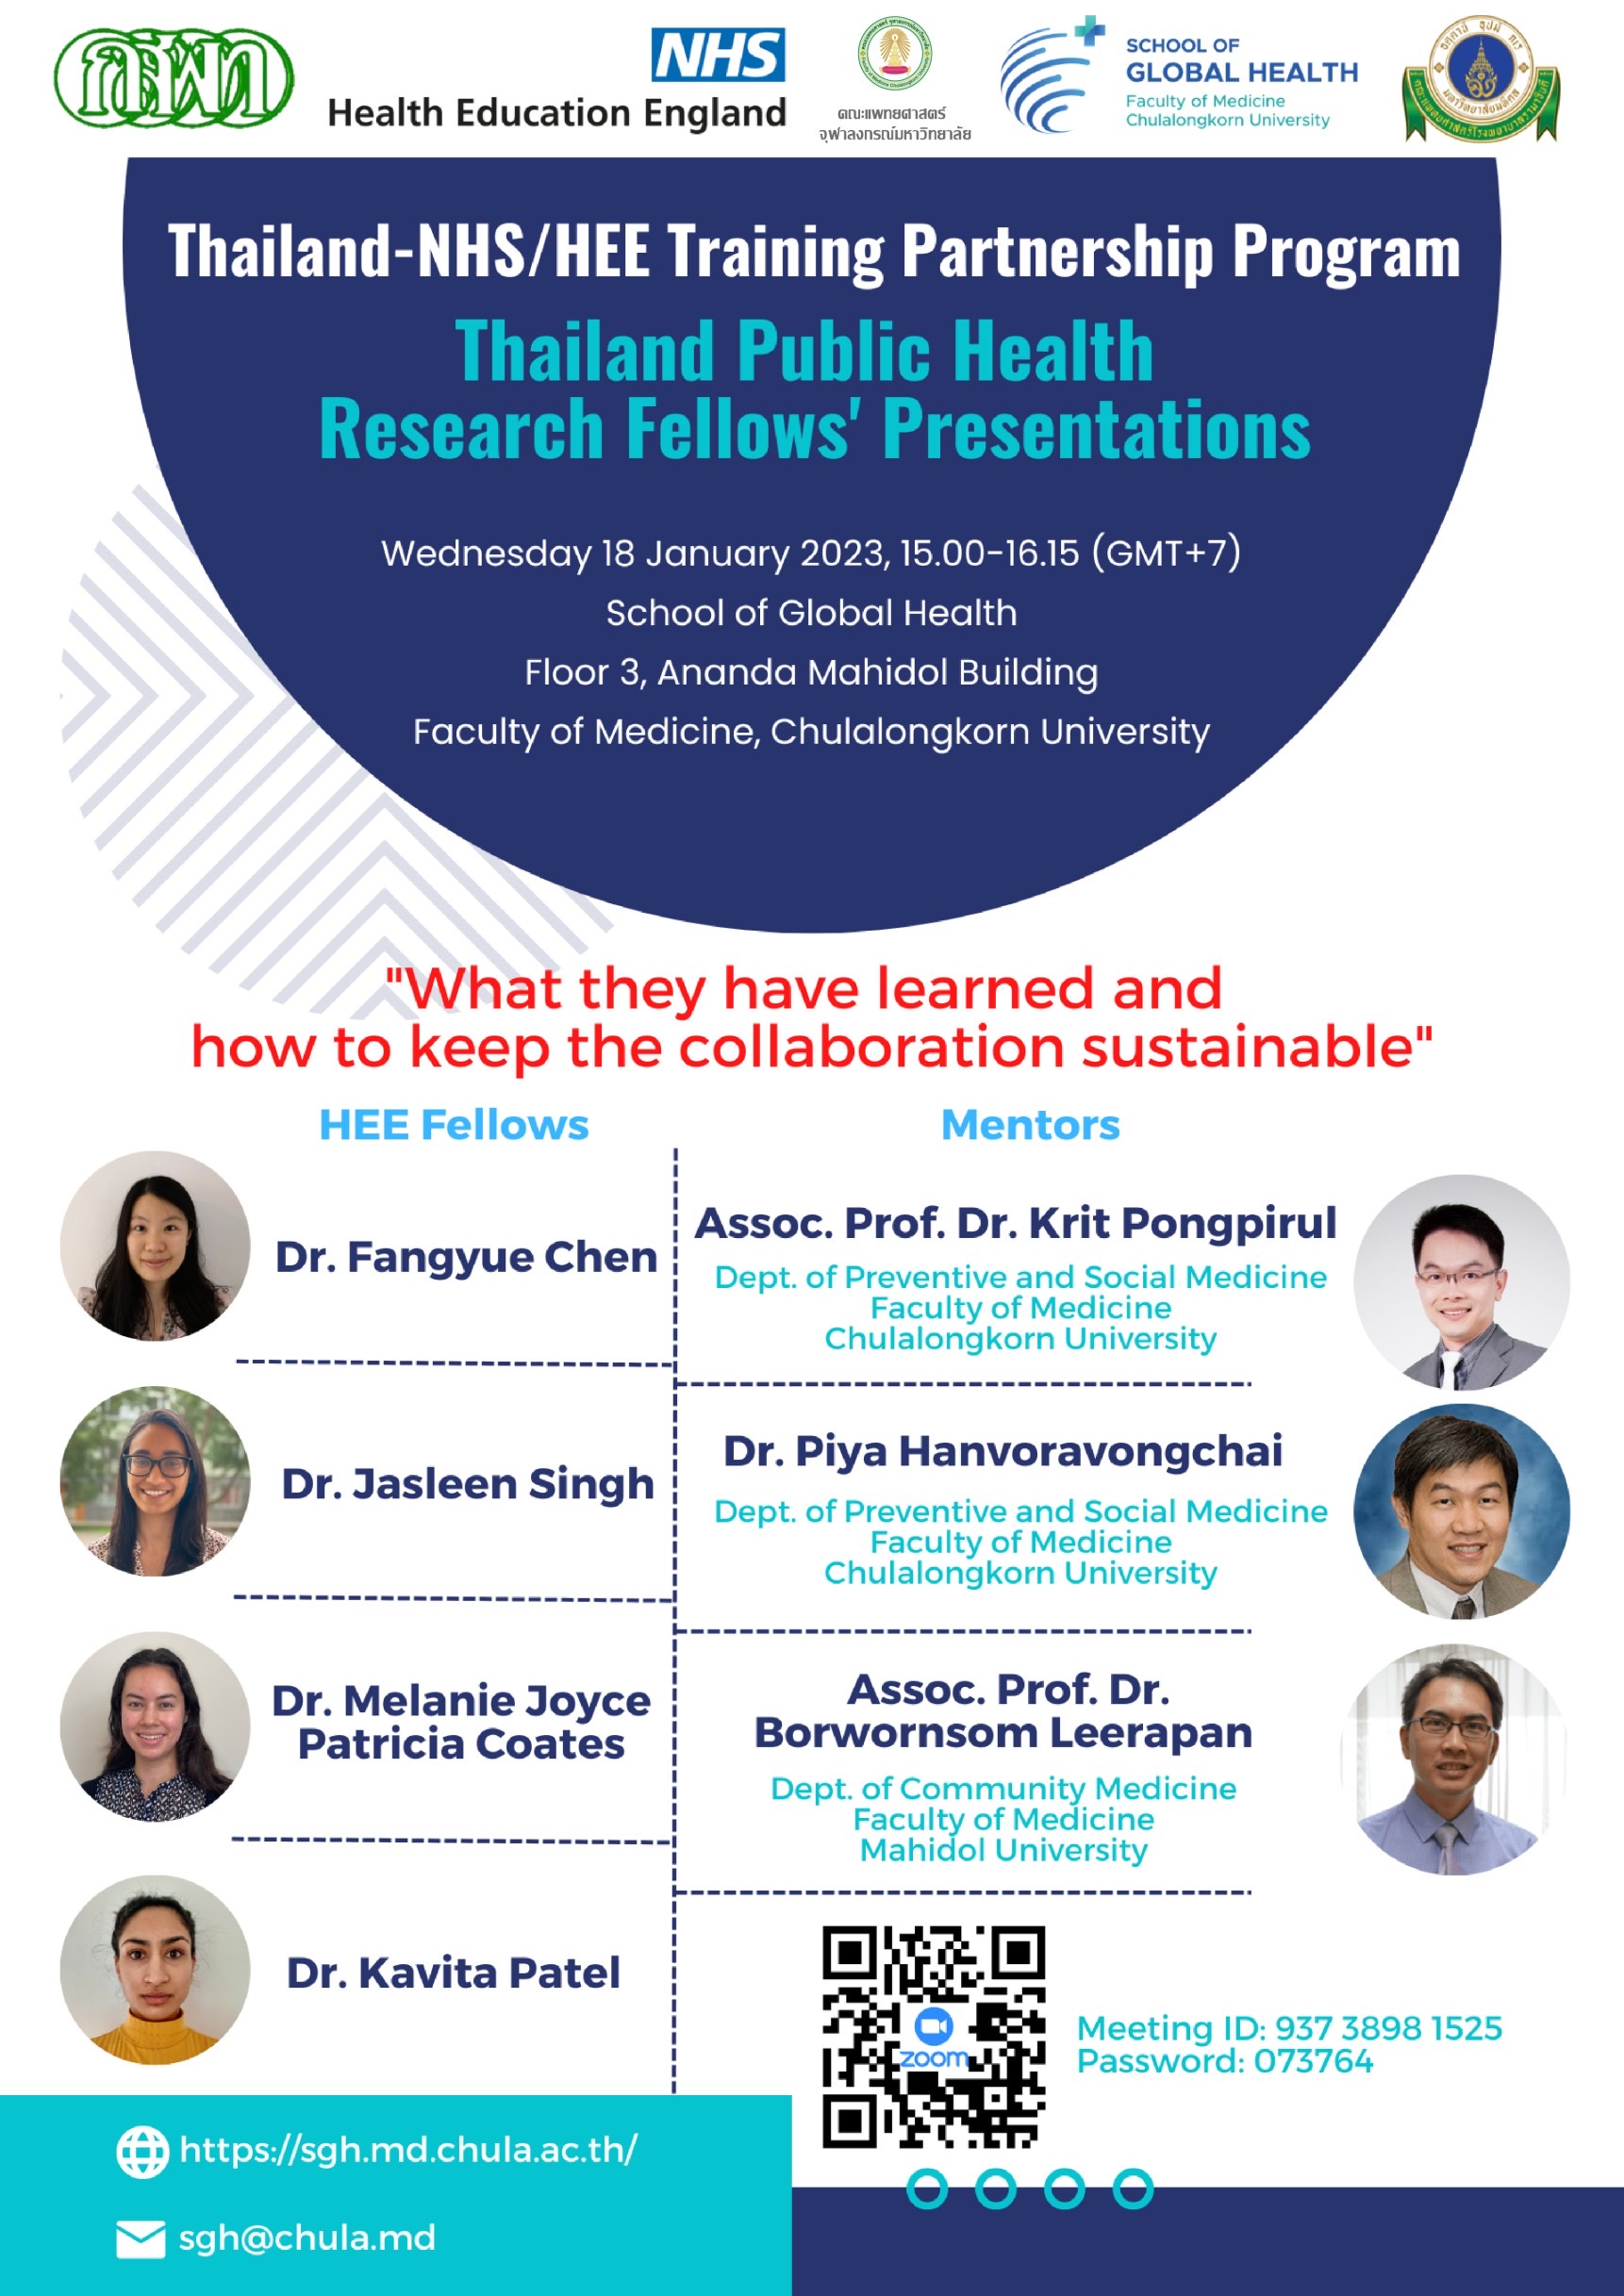 Thailand-NHS/HEE Training Partnership Program Thailand Public Health Research Fellows’ Presentations